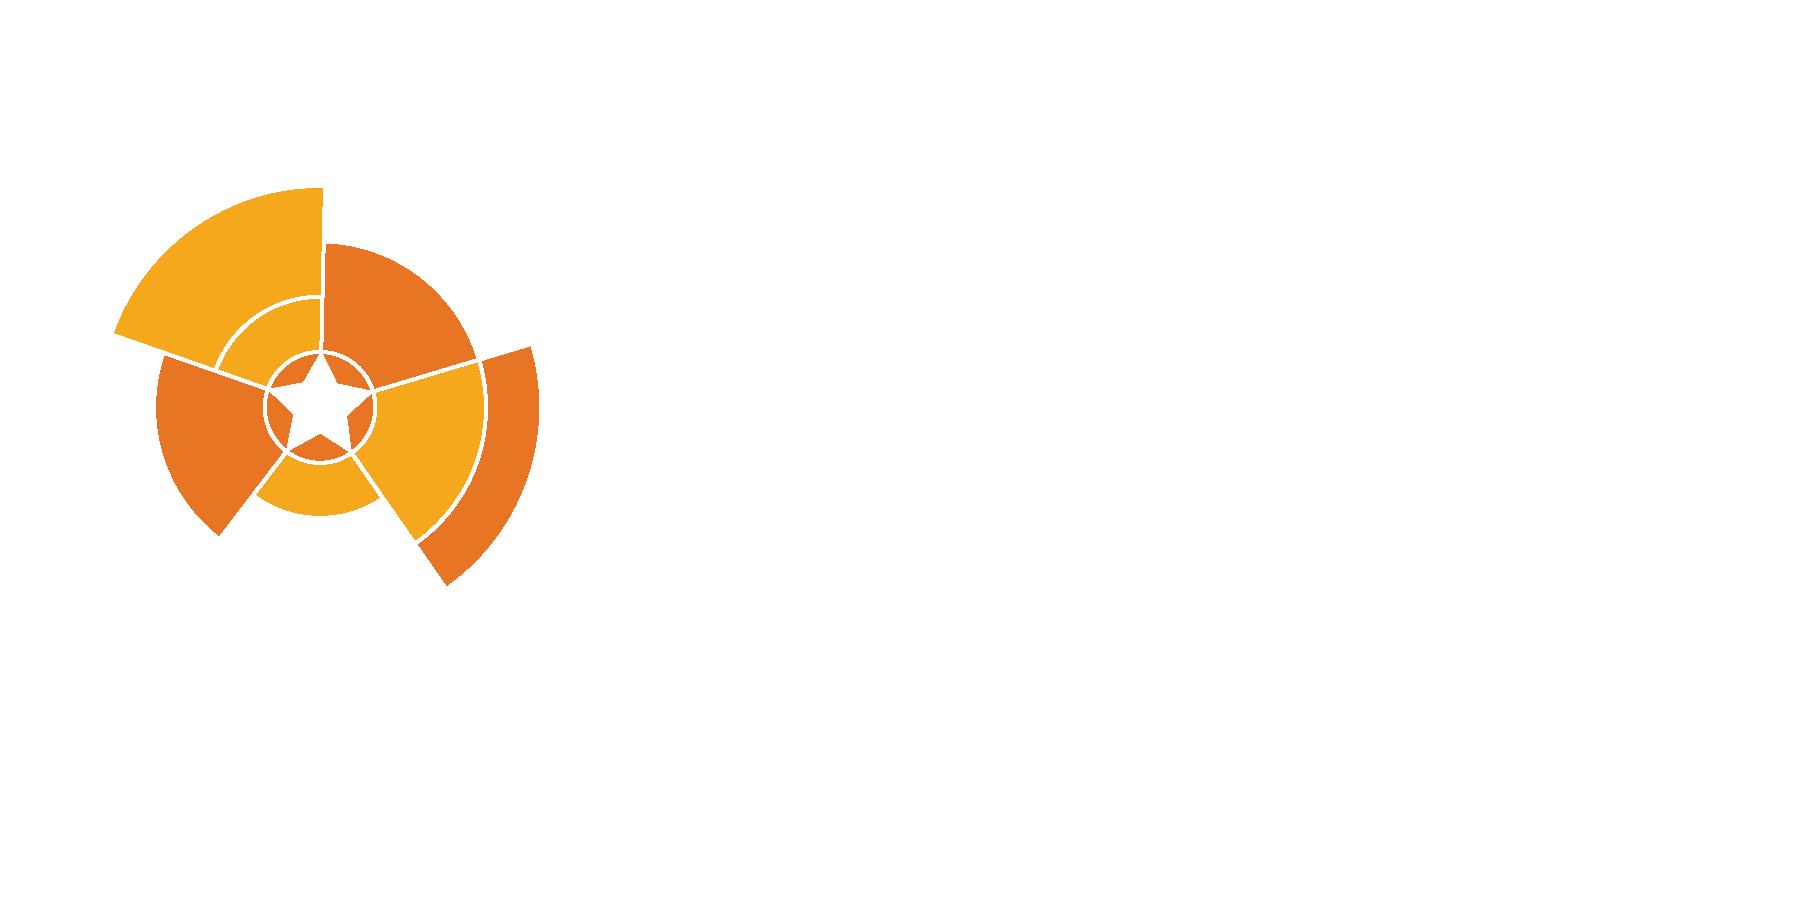 NineStar Connect